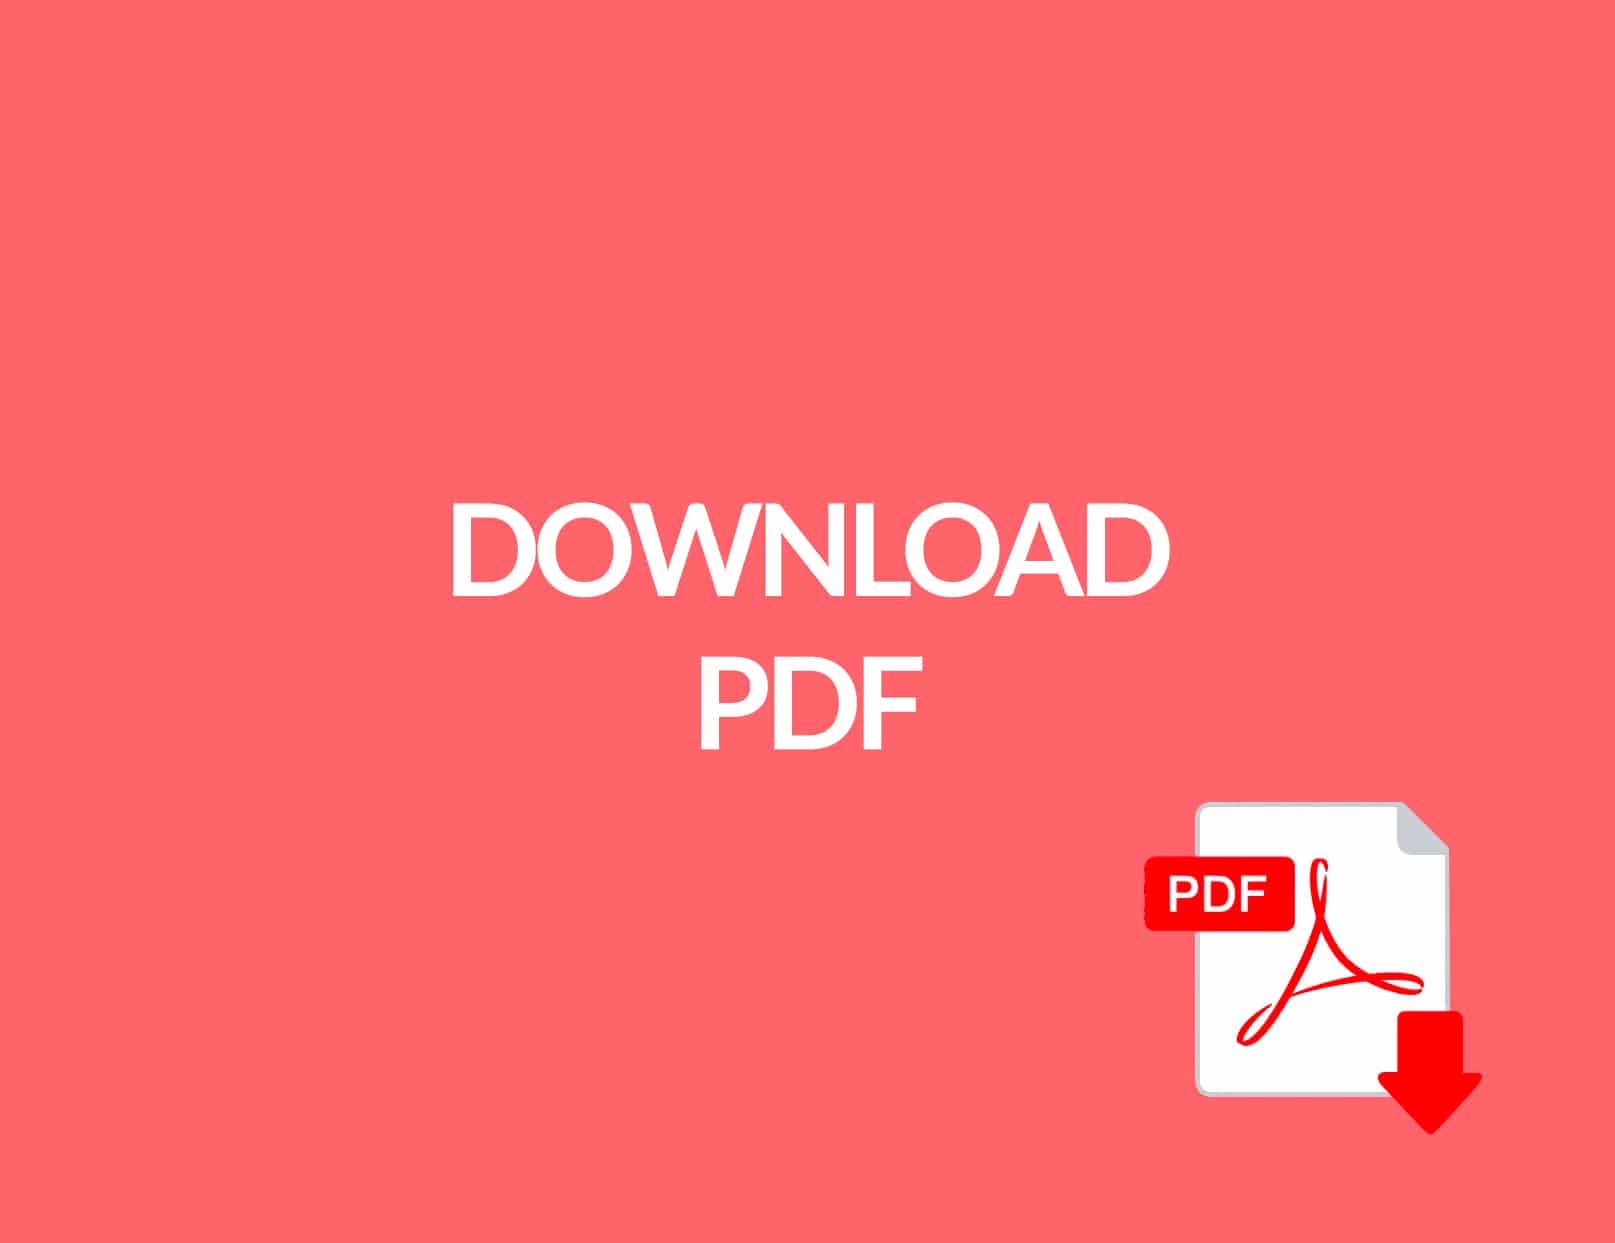 Technical Data | DOWNLOAD PDF